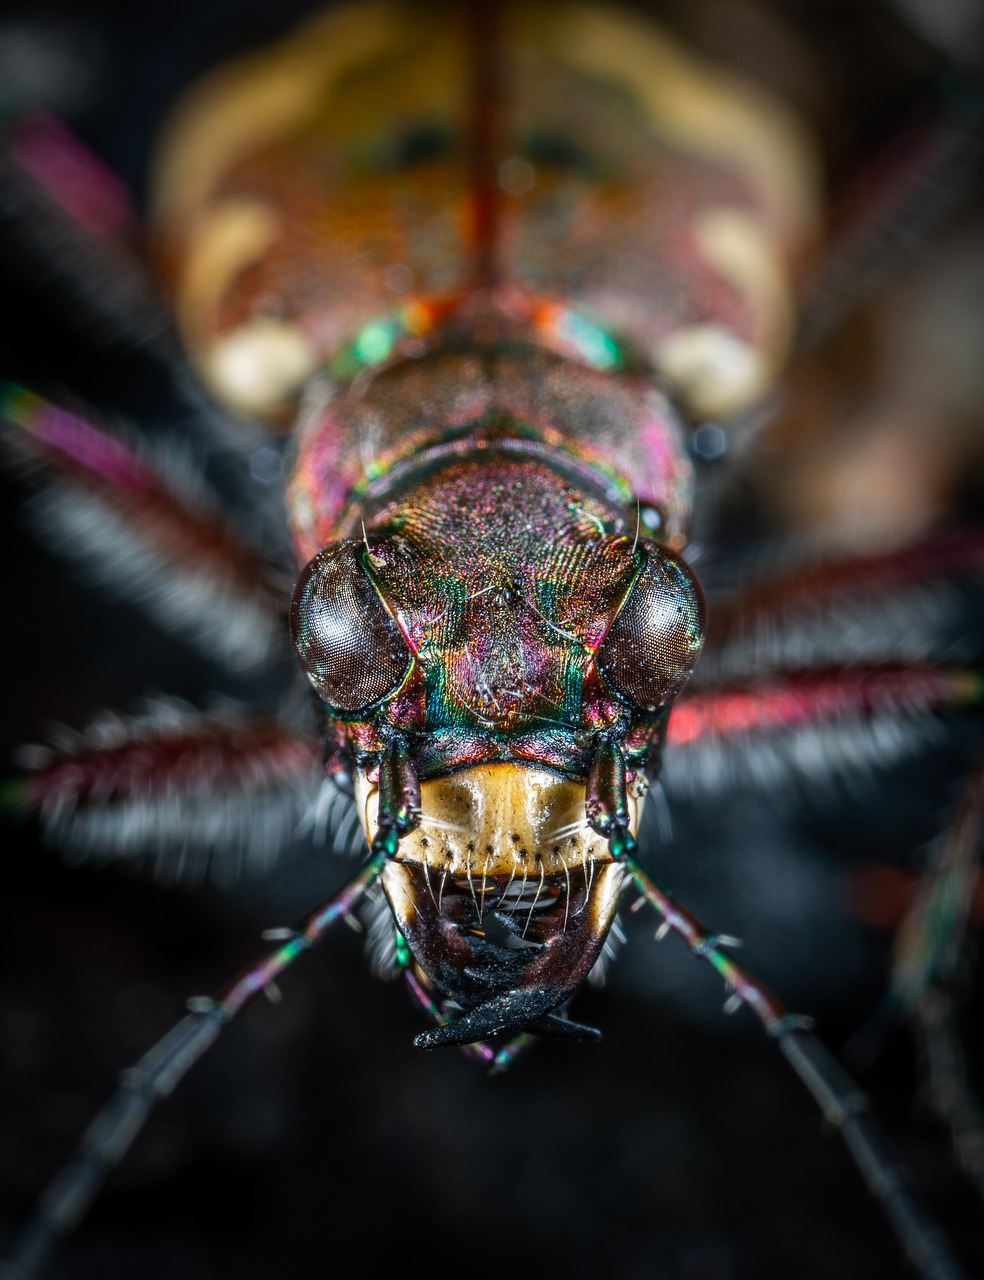 bespozvonochnoe  insect  beetle free photo